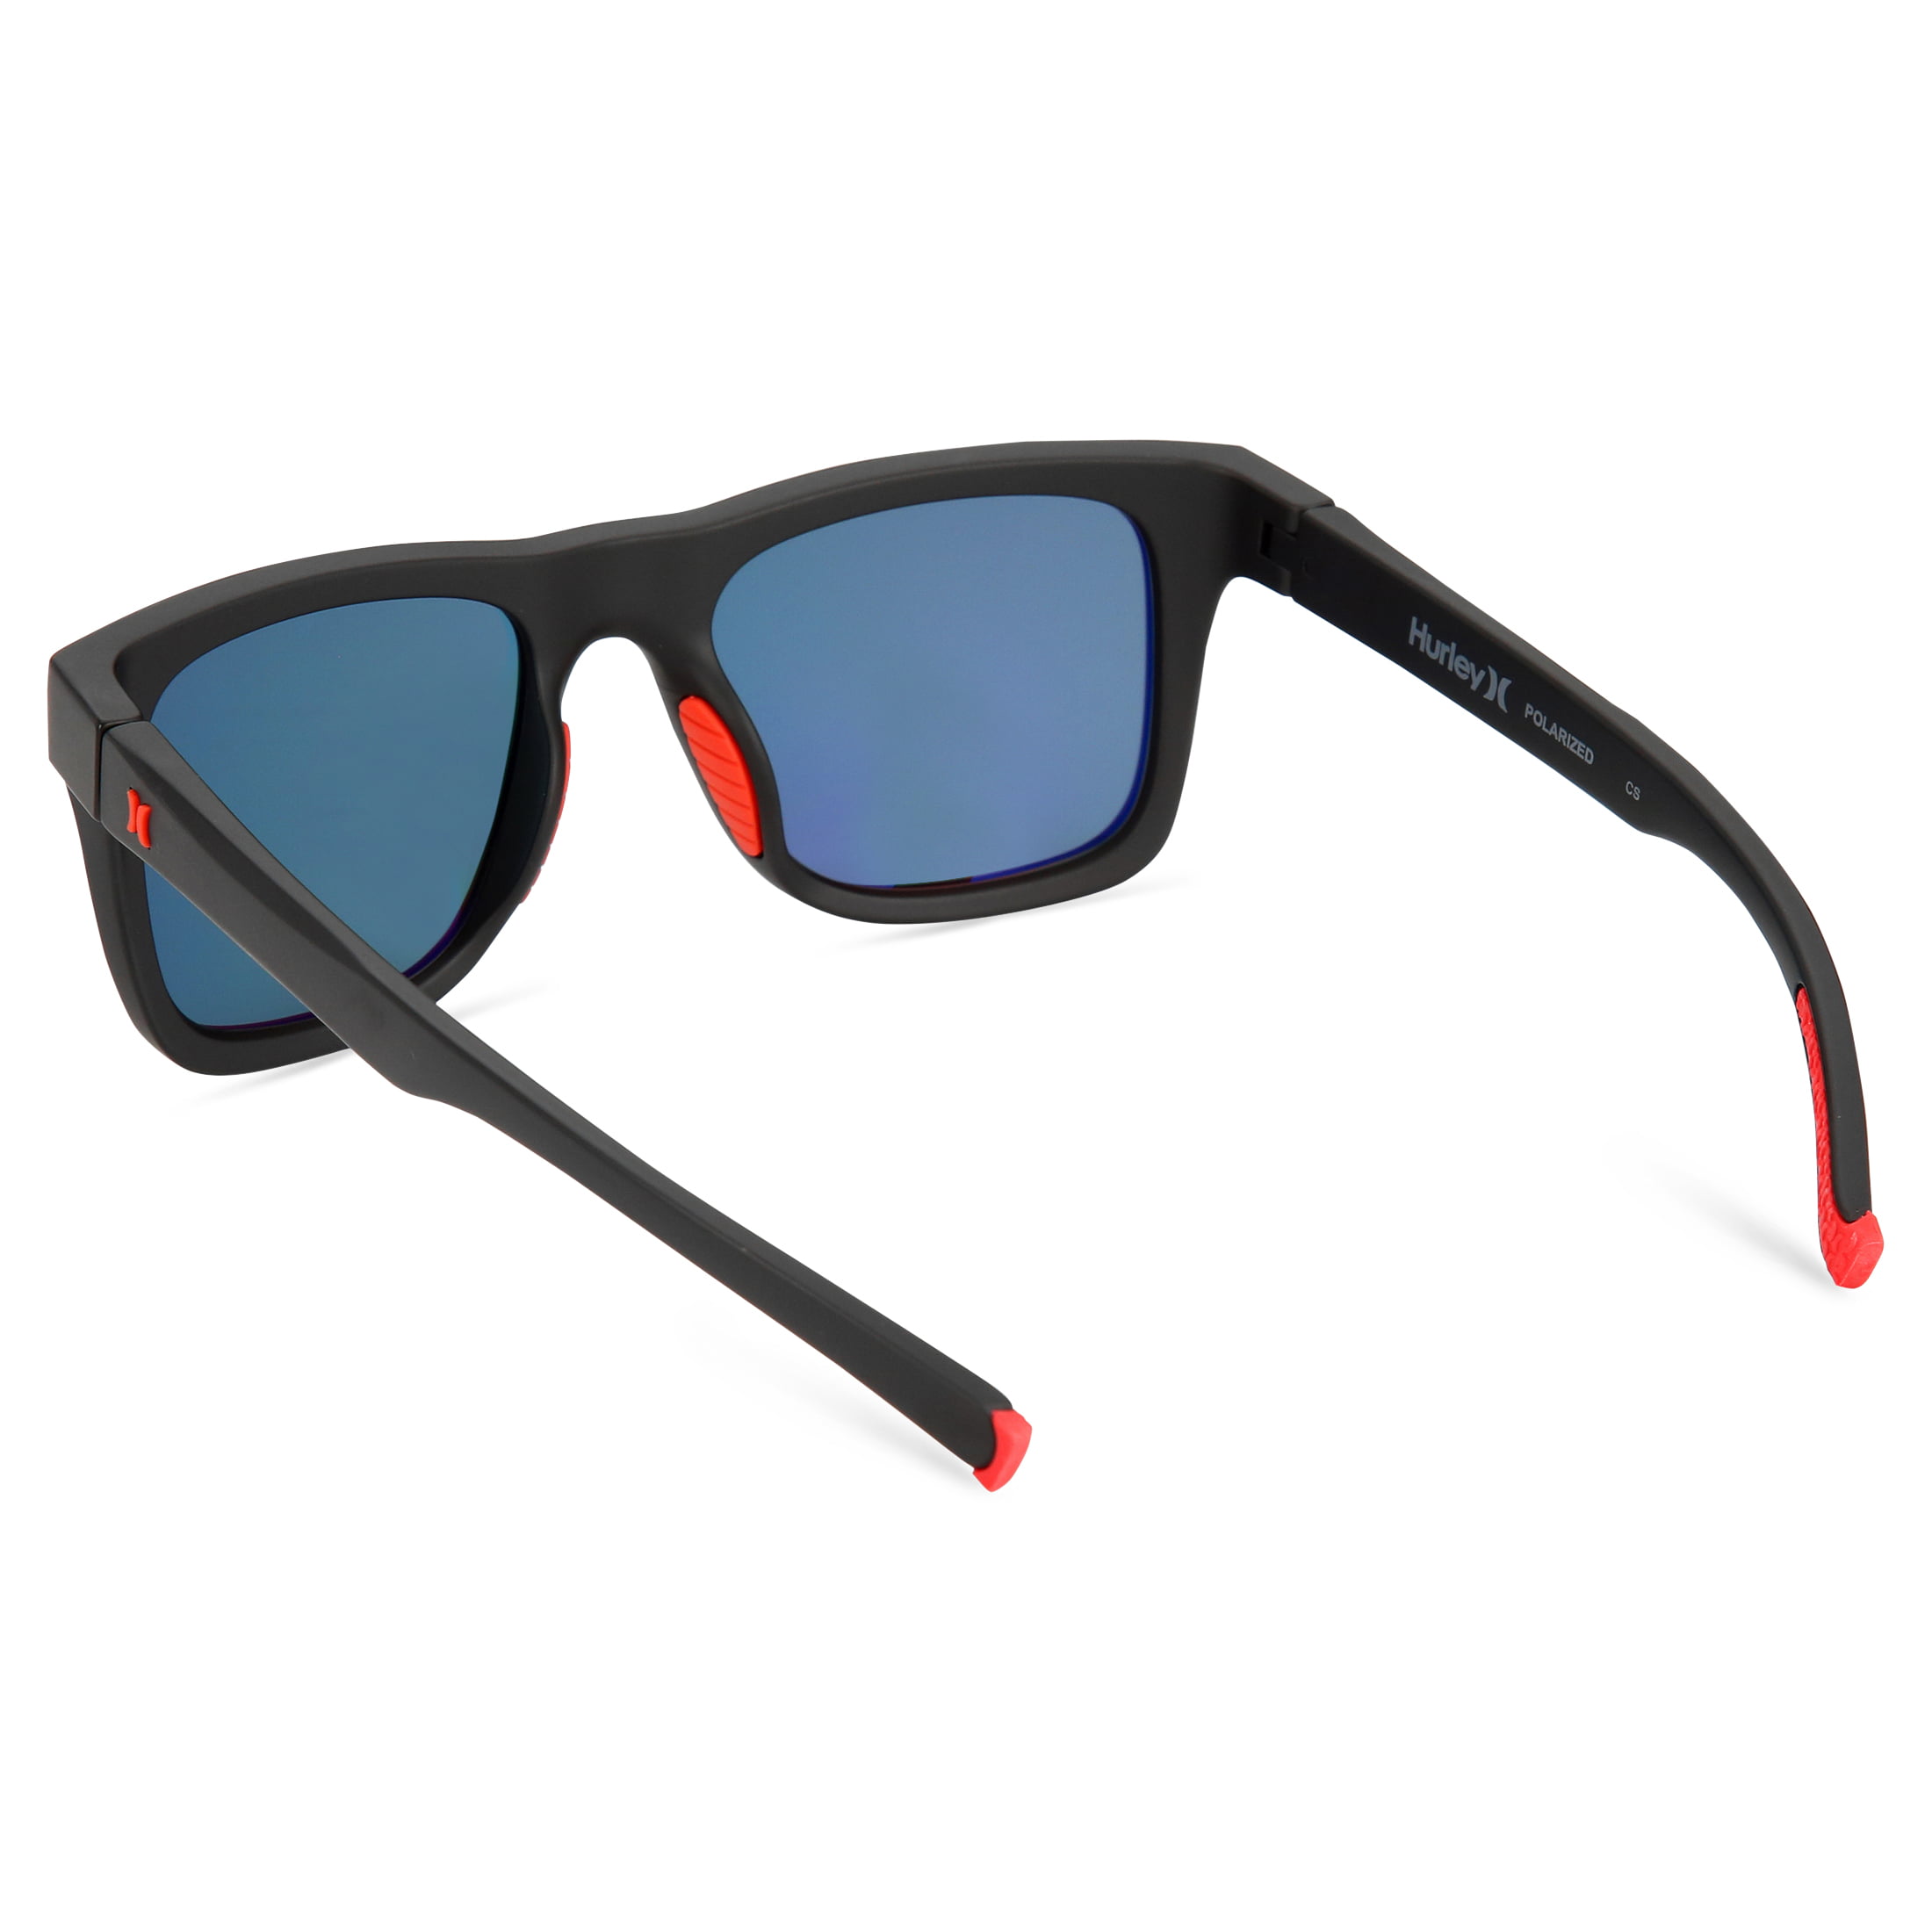 Hurley Men's Rx'able Sport Polarized Sunglasses, HSM3000P Sunrise